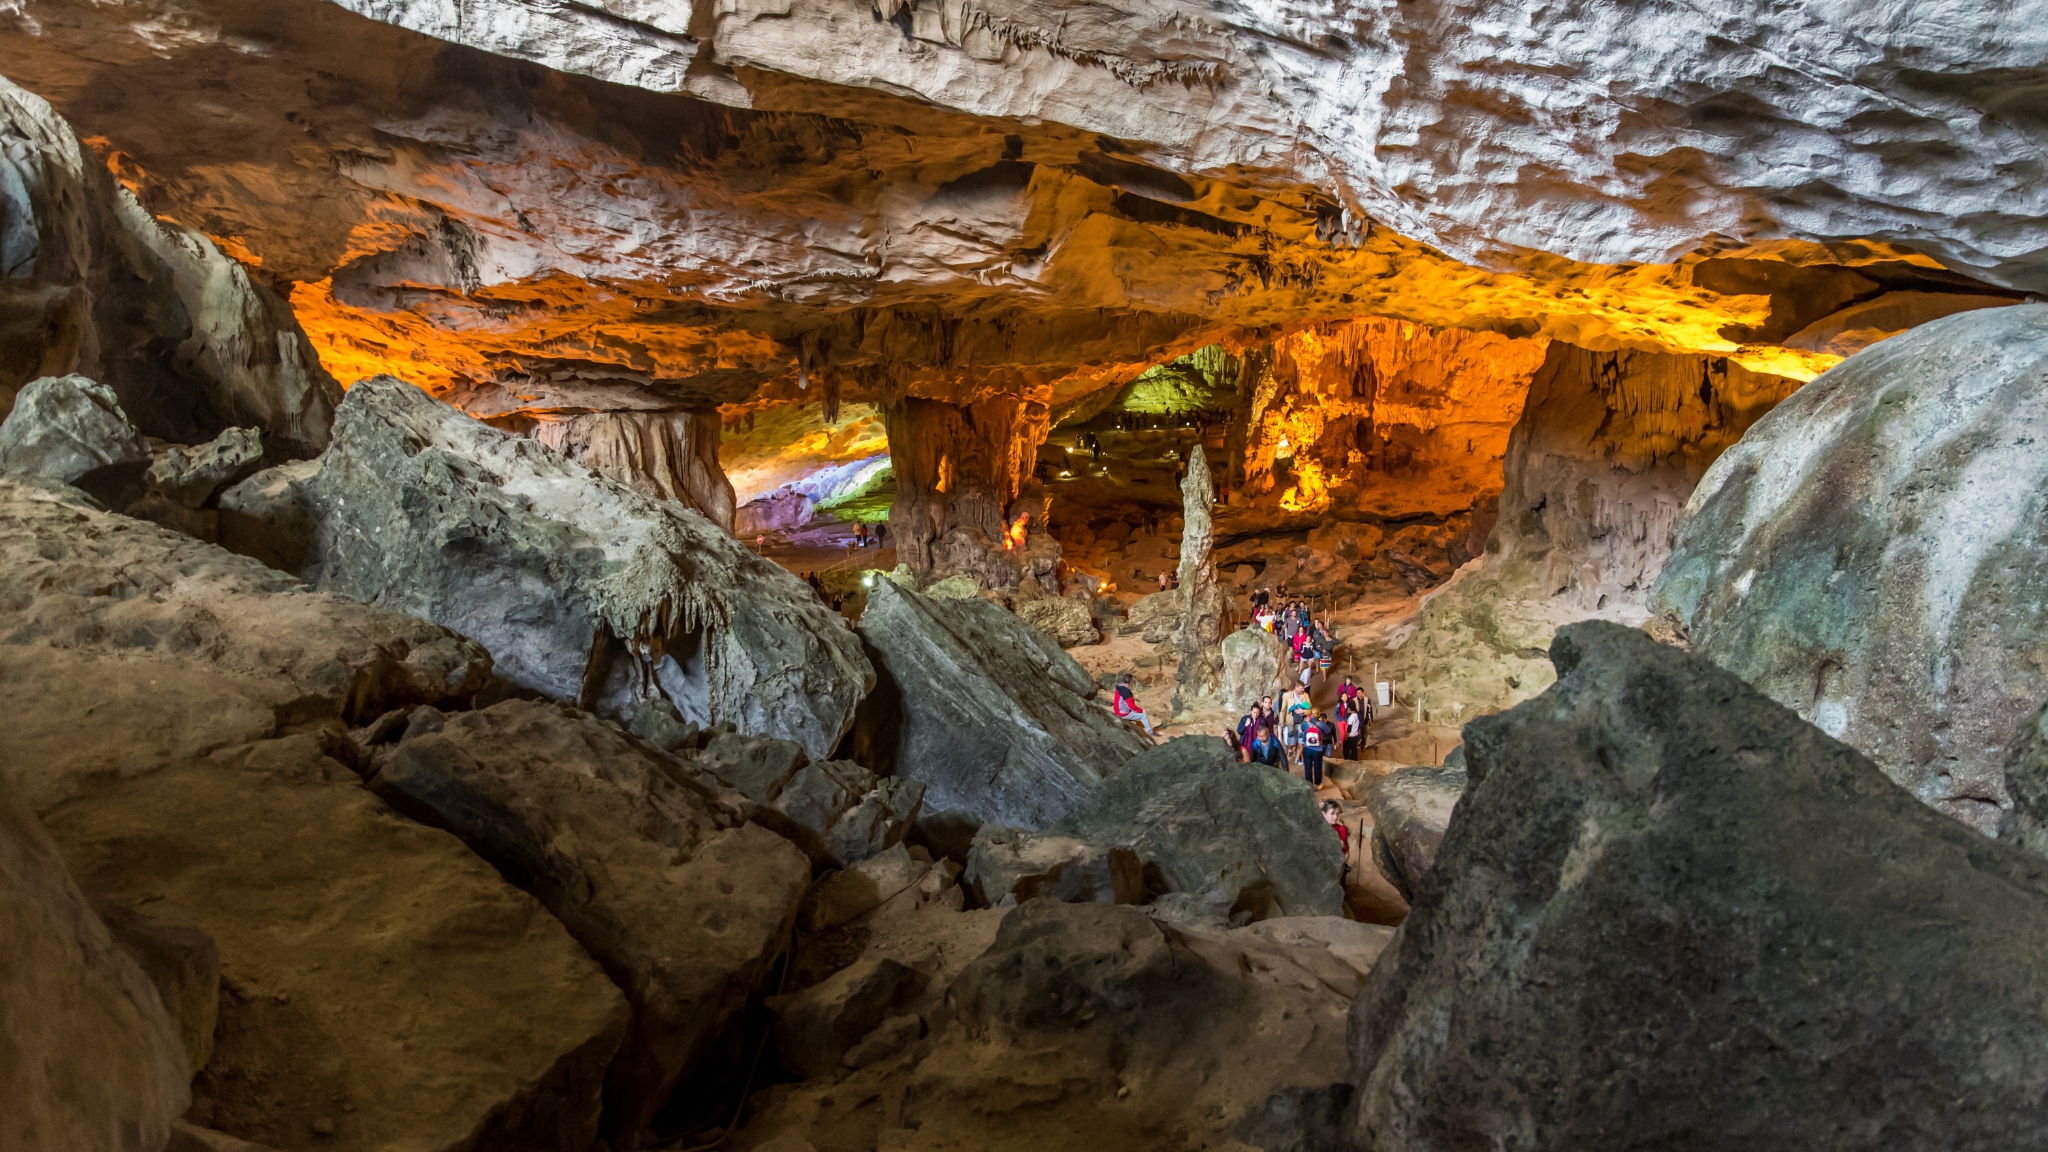 A magnificent corner of Sung Sot Cave